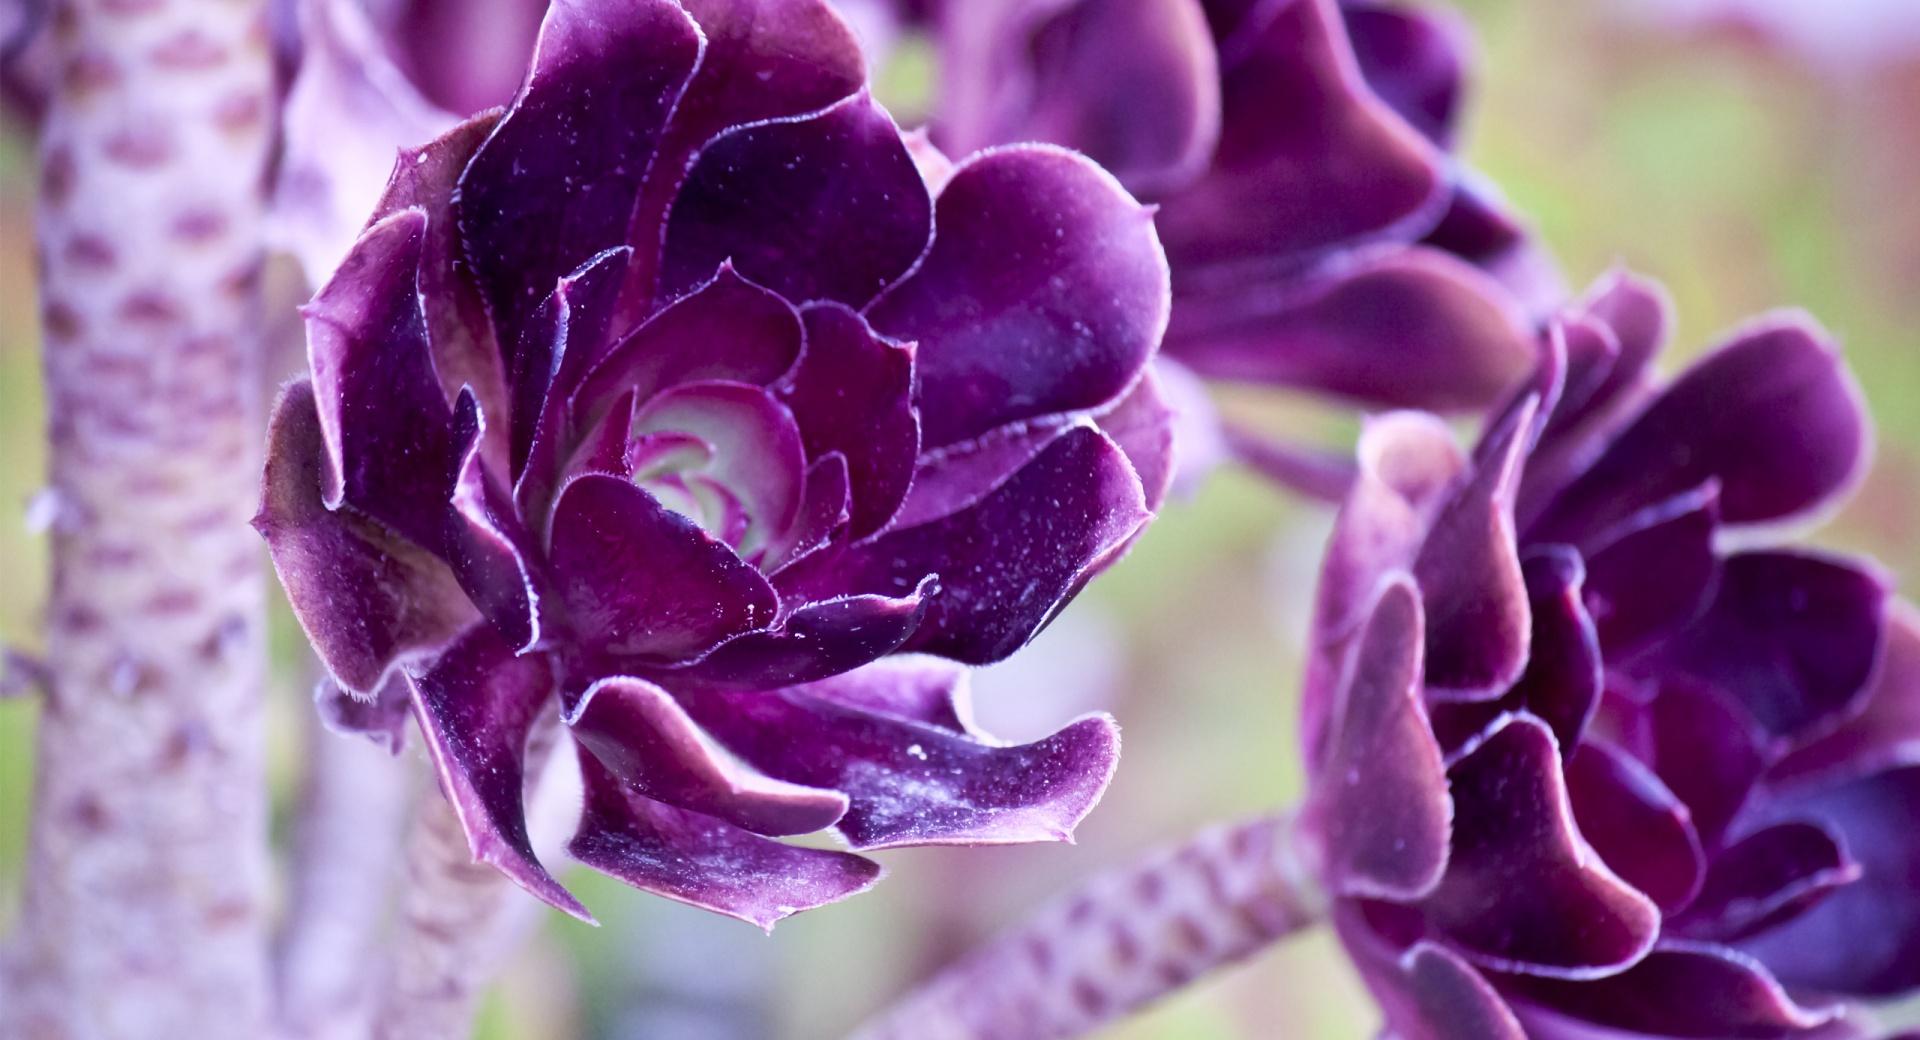 Macro Purple Flowers at 1024 x 1024 iPad size wallpapers HD quality